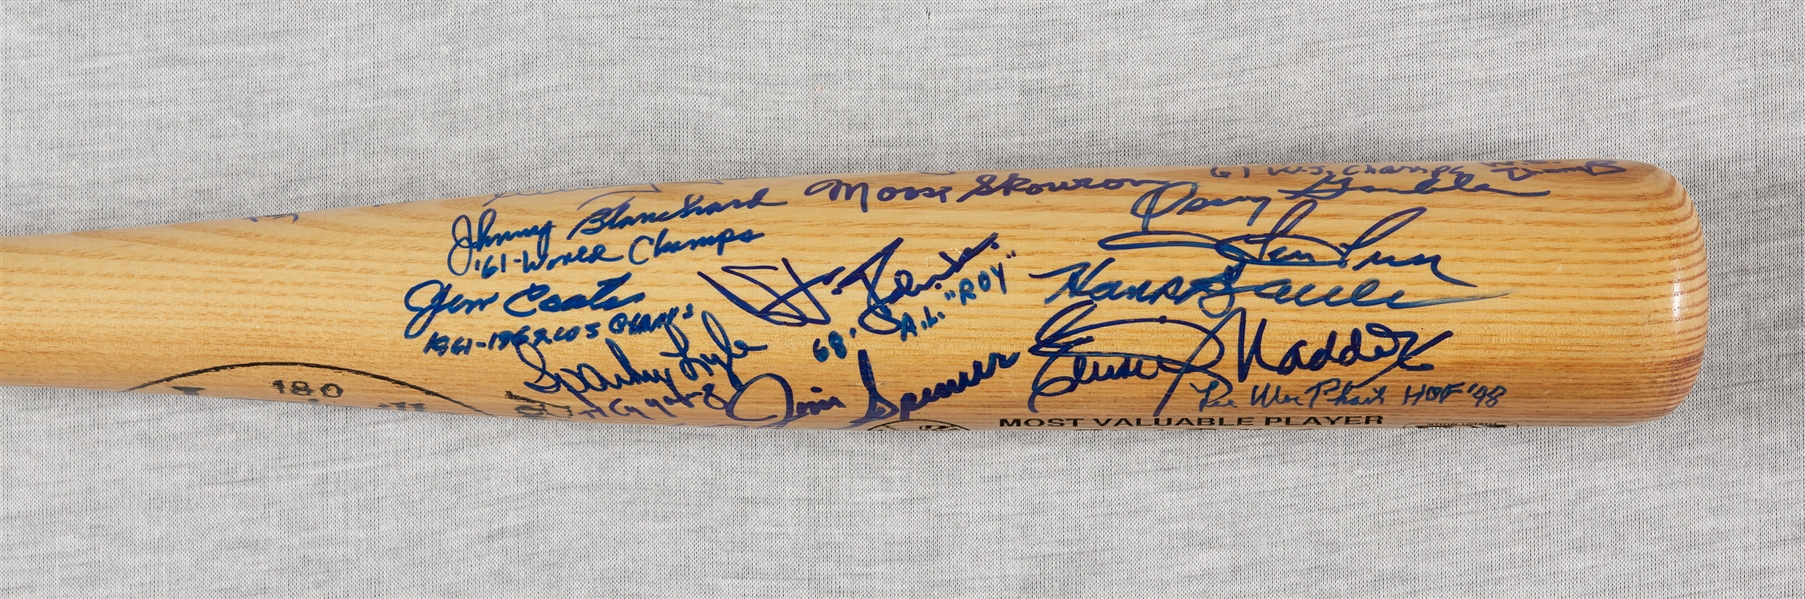 New York Yankees Multi-Signed Bat (28 Signatures) (PSA/DNA)